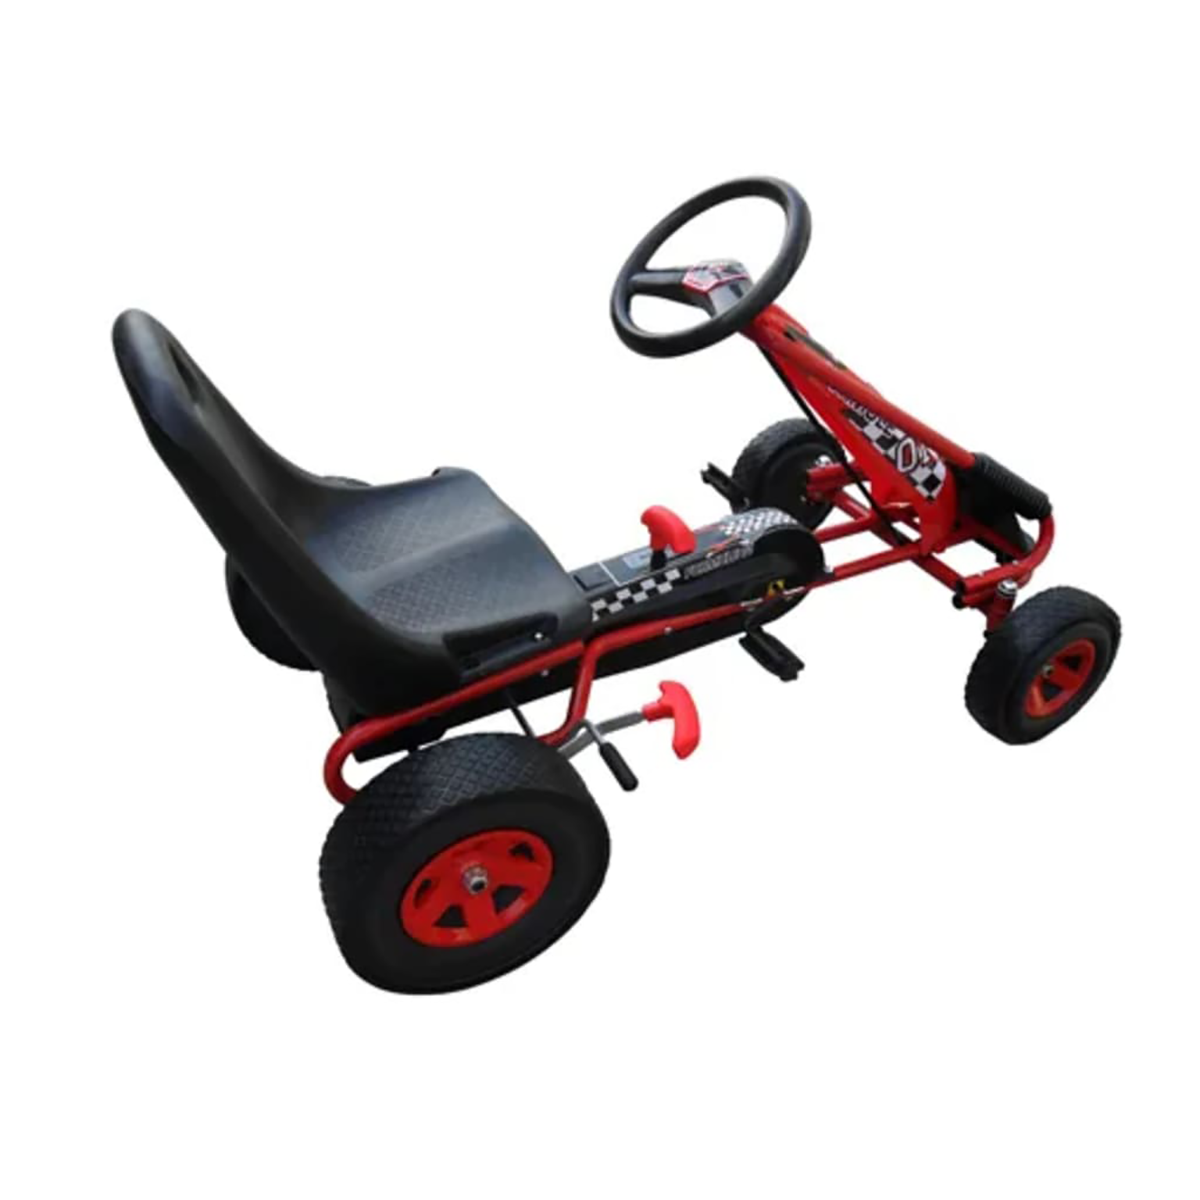 VIDAXL Go Kart Kinderfahrzeug R